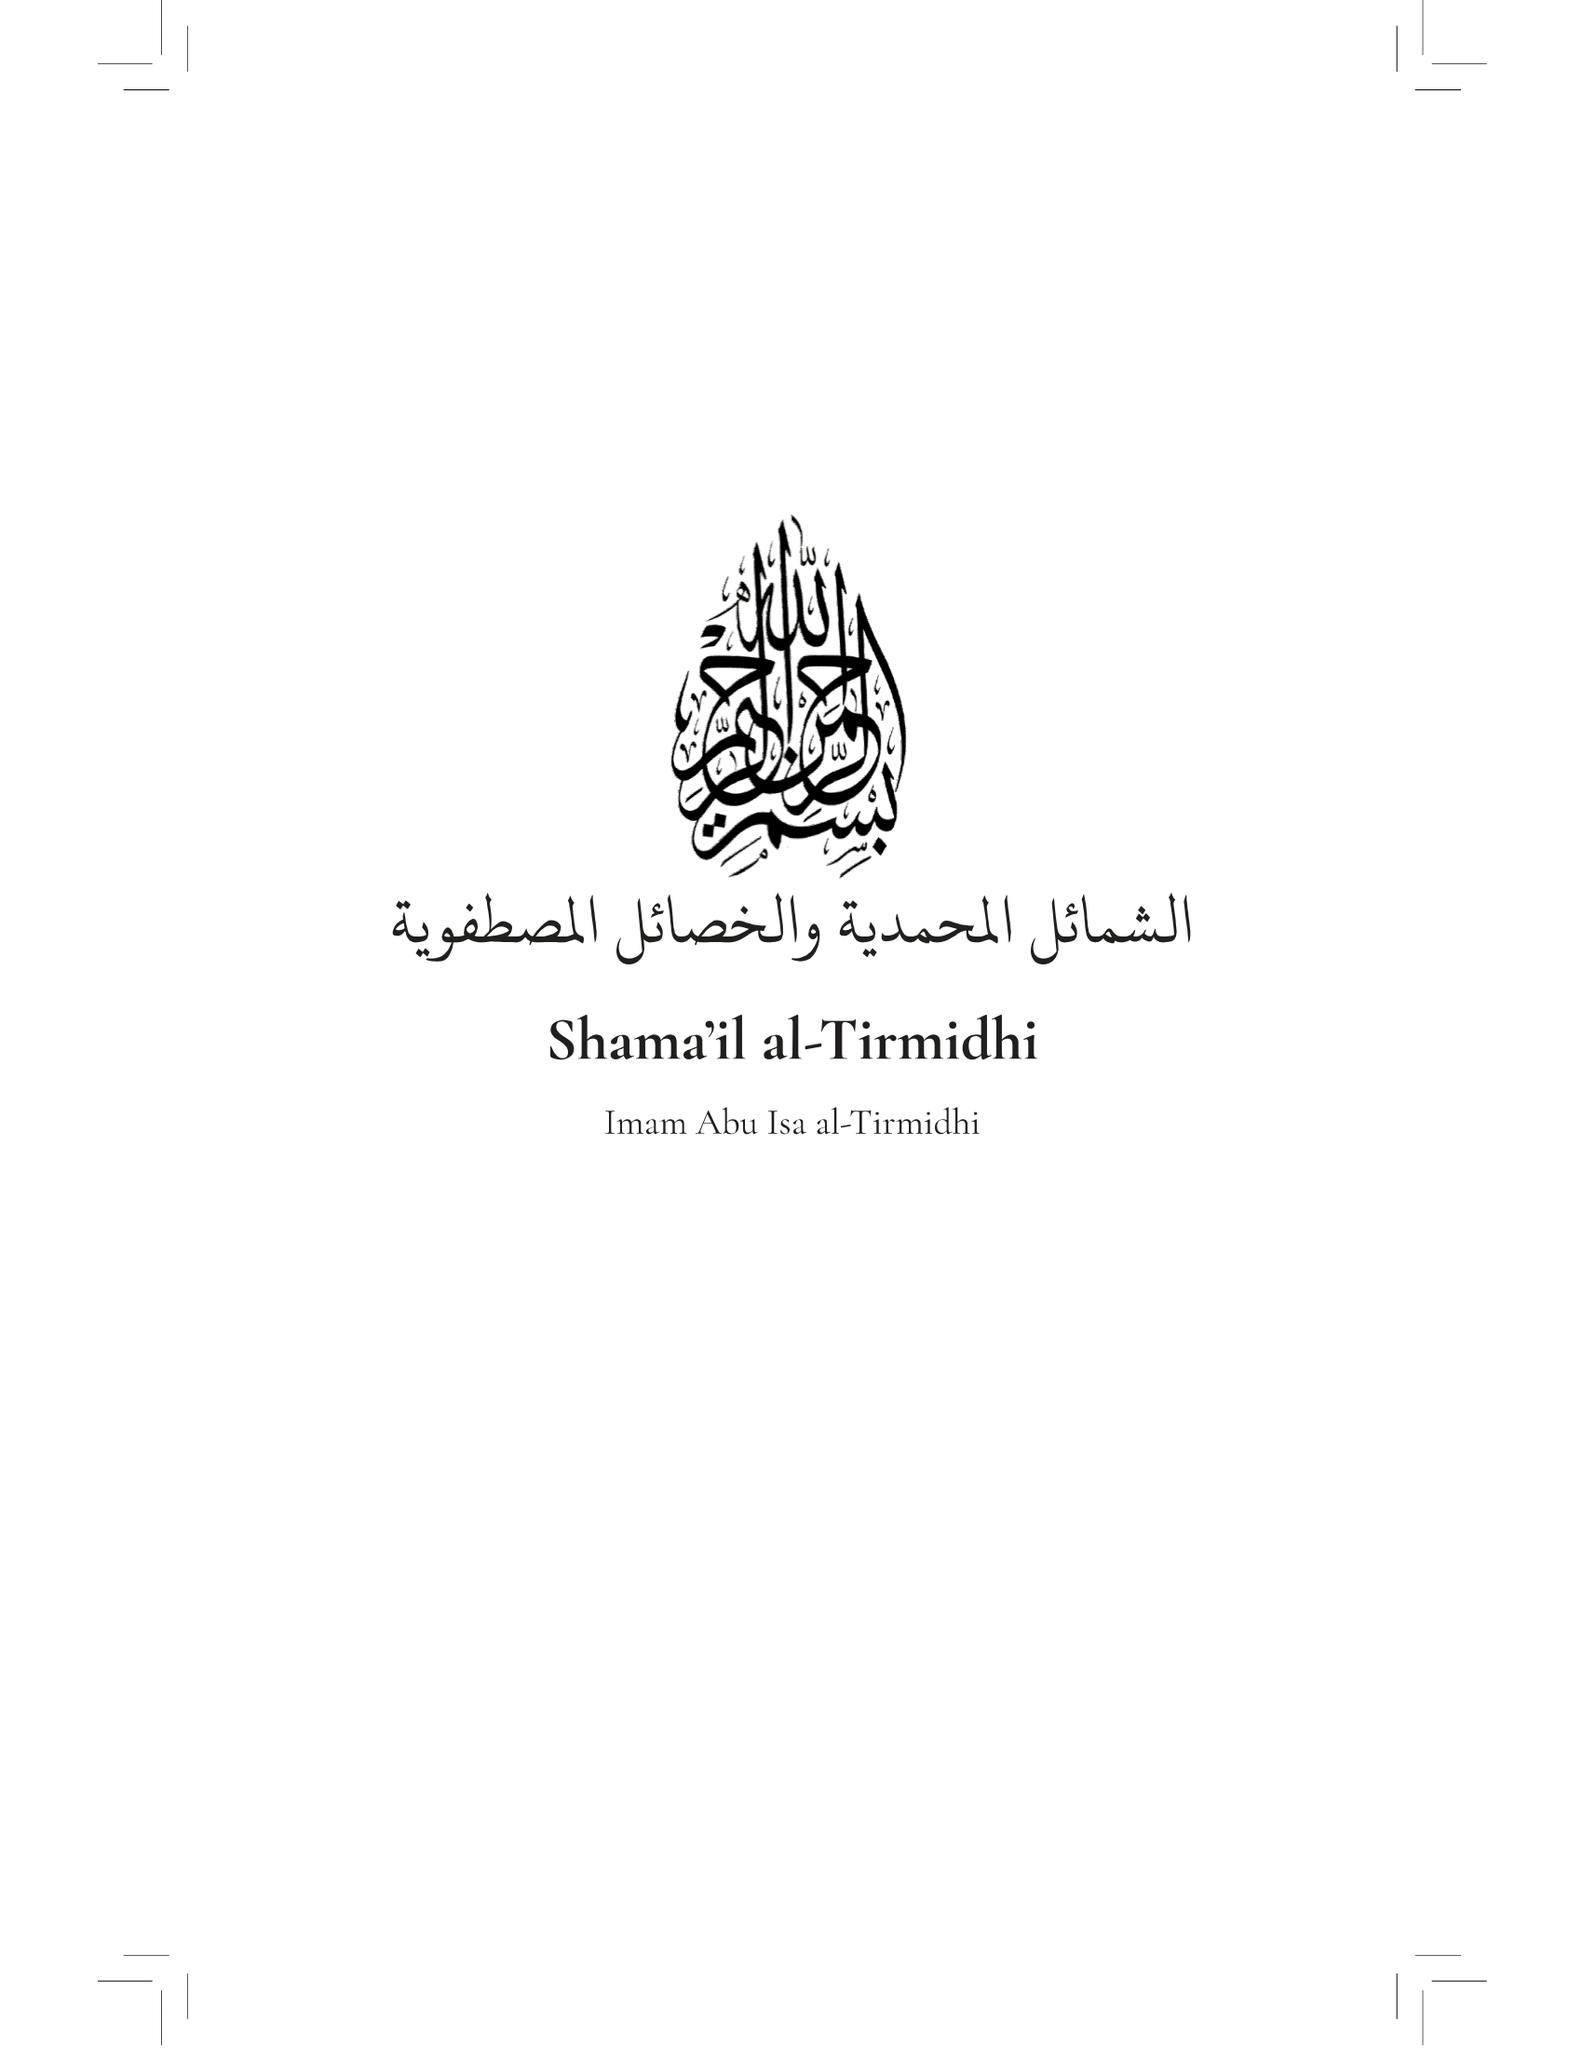 Shama’il al-Tirmidhi